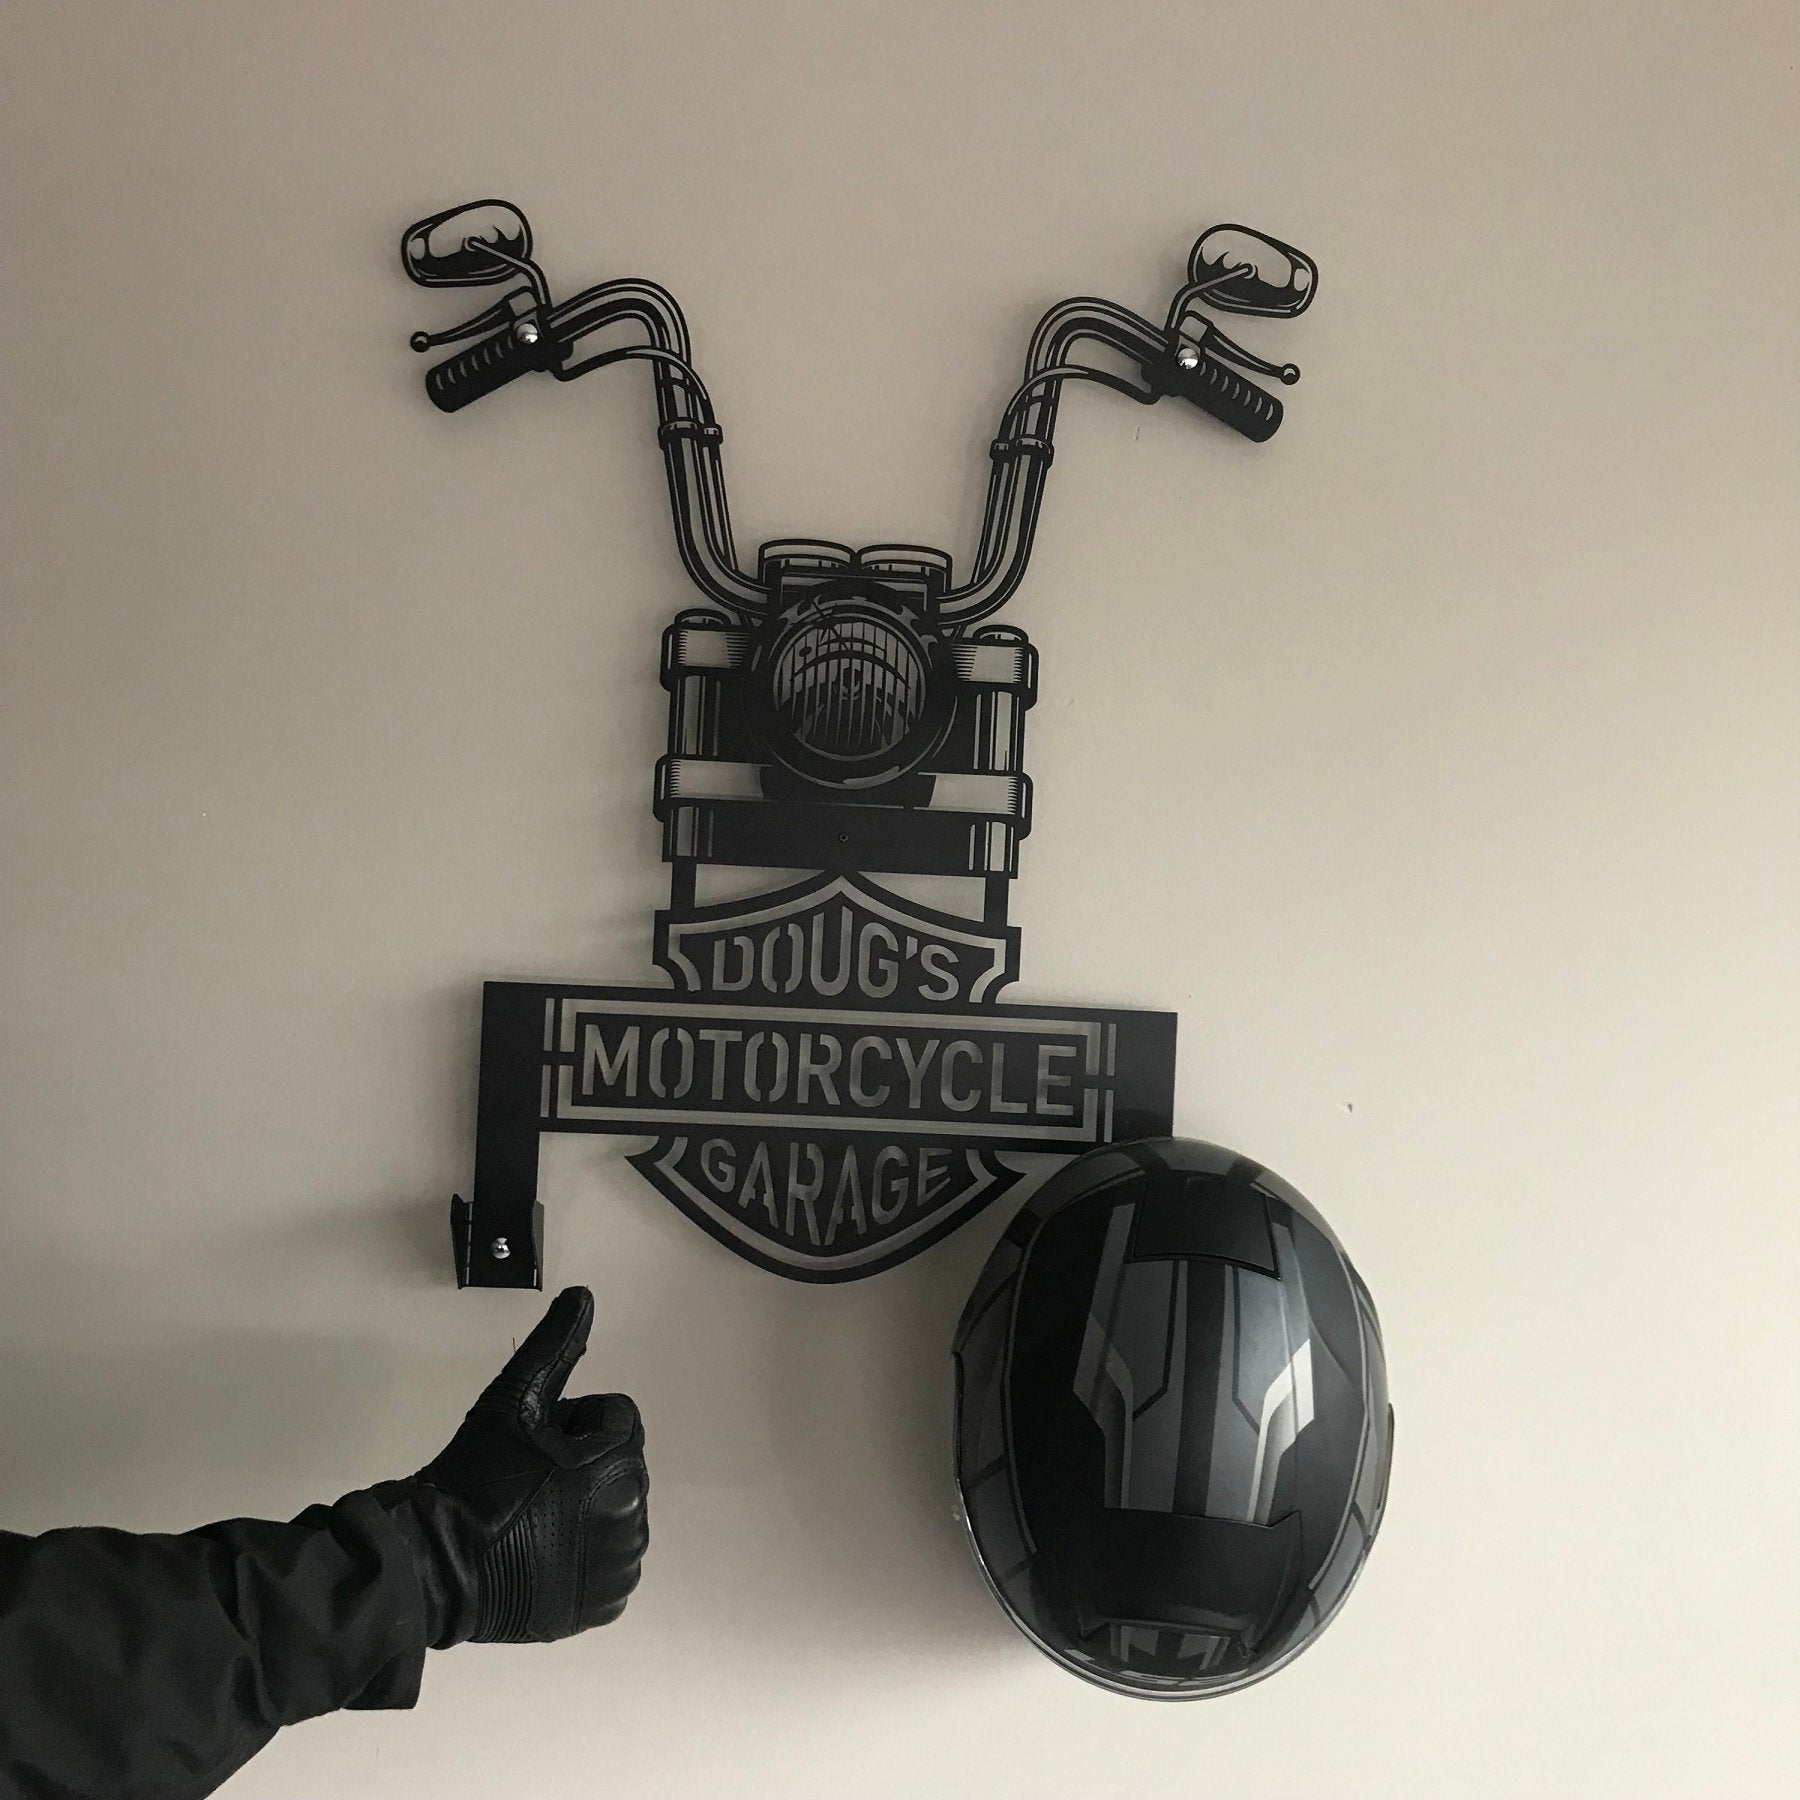 Personalized Motorcycle Helmet Holder - Helmet Rack - Helmet Hanger Hook - Motorcycle Helmet and Jacket Holder Wall Mount